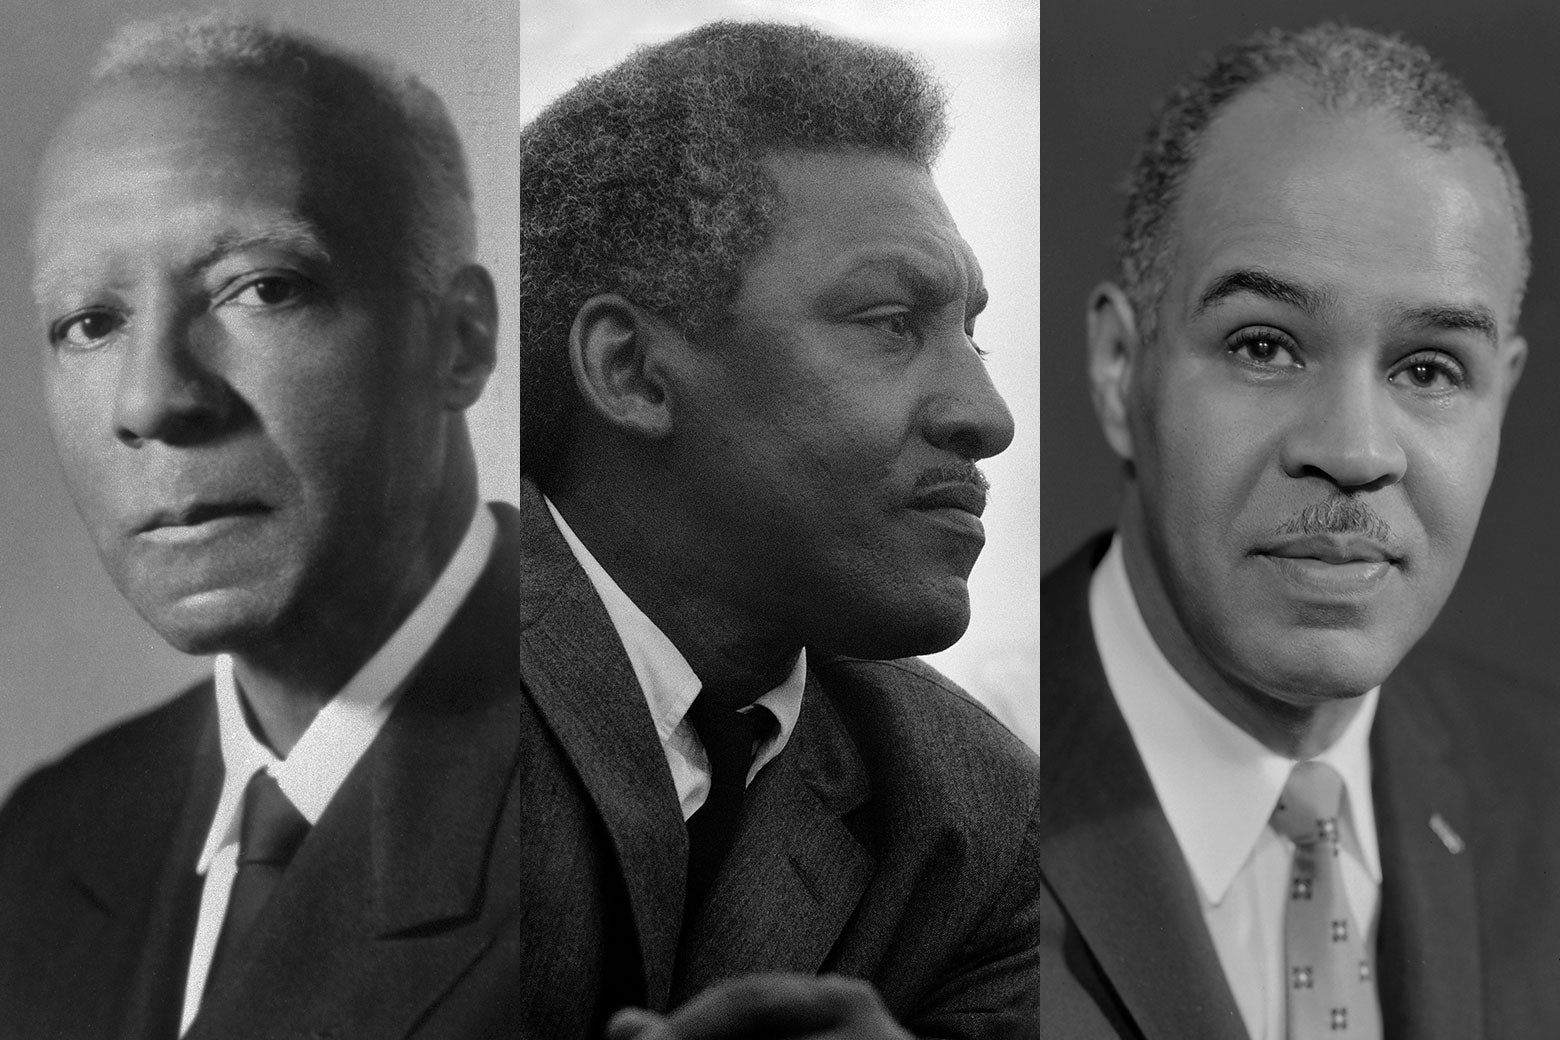 A. Philip Randolph, Bayard Rustin, and Roy Wilkins